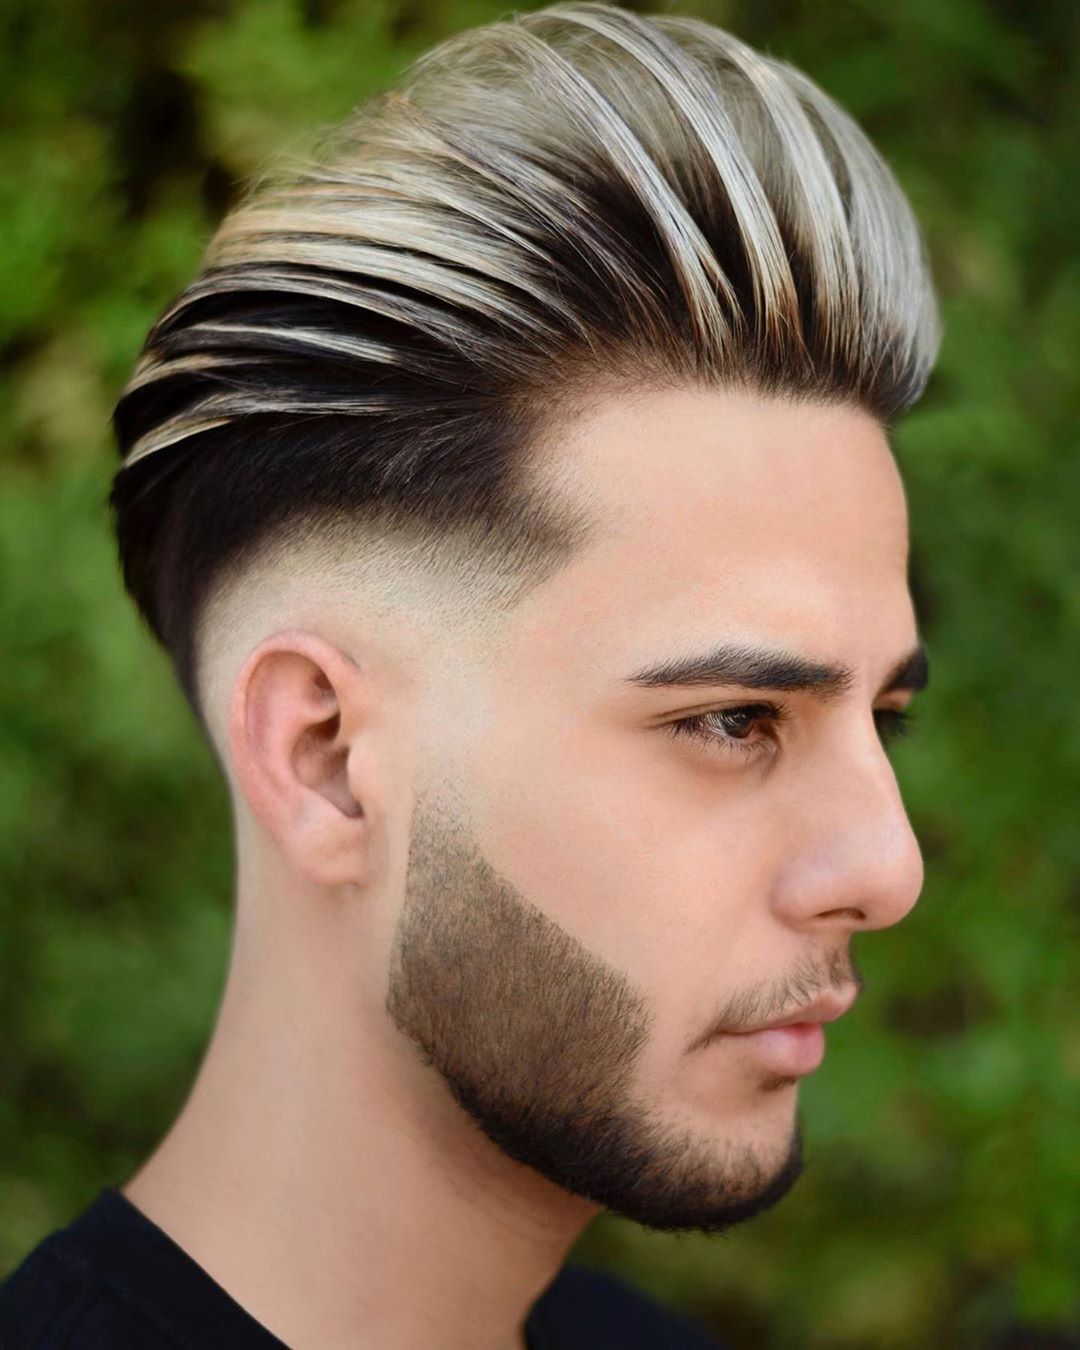 16 Hair style man cutting image for Medium Length